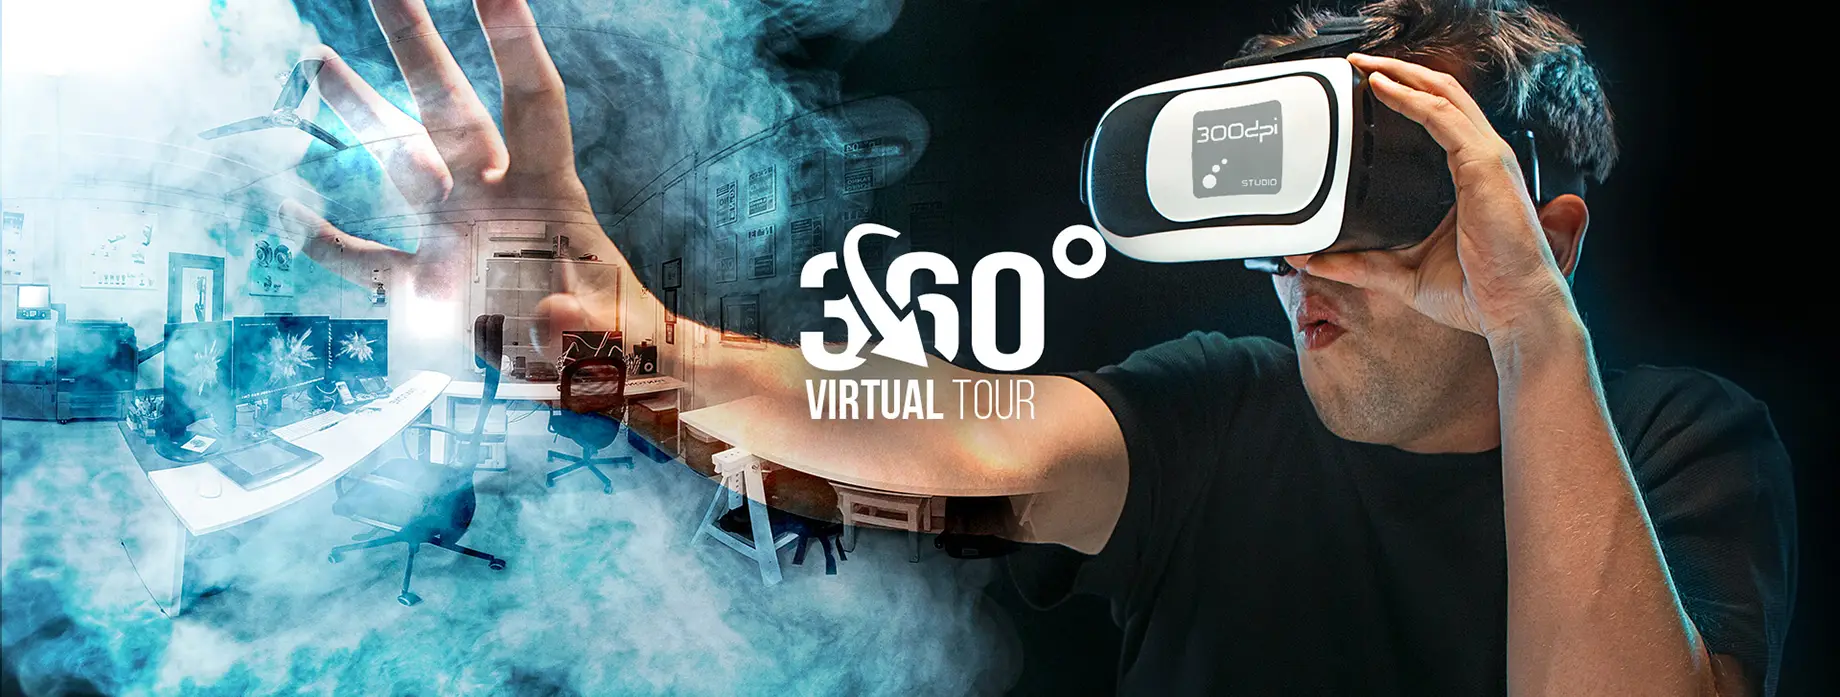 Virtual Tour Spoleto 360° | 300dpi STUDIO - Spoleto Rimini